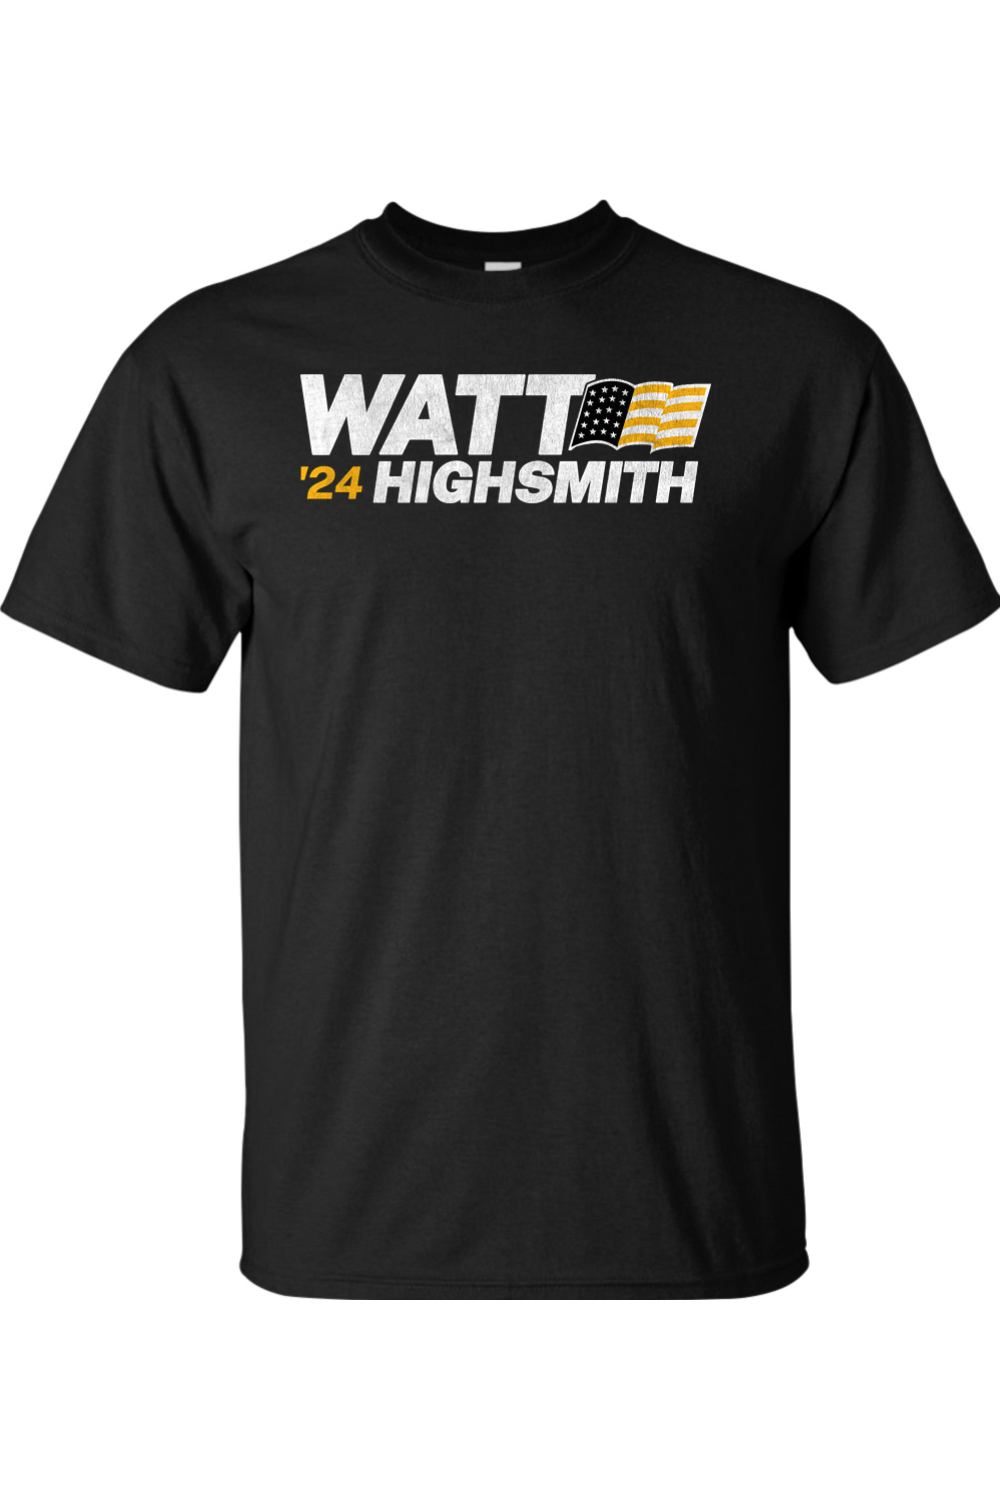 Watt Highsmith '24 - Big & Tall - Yinzylvania